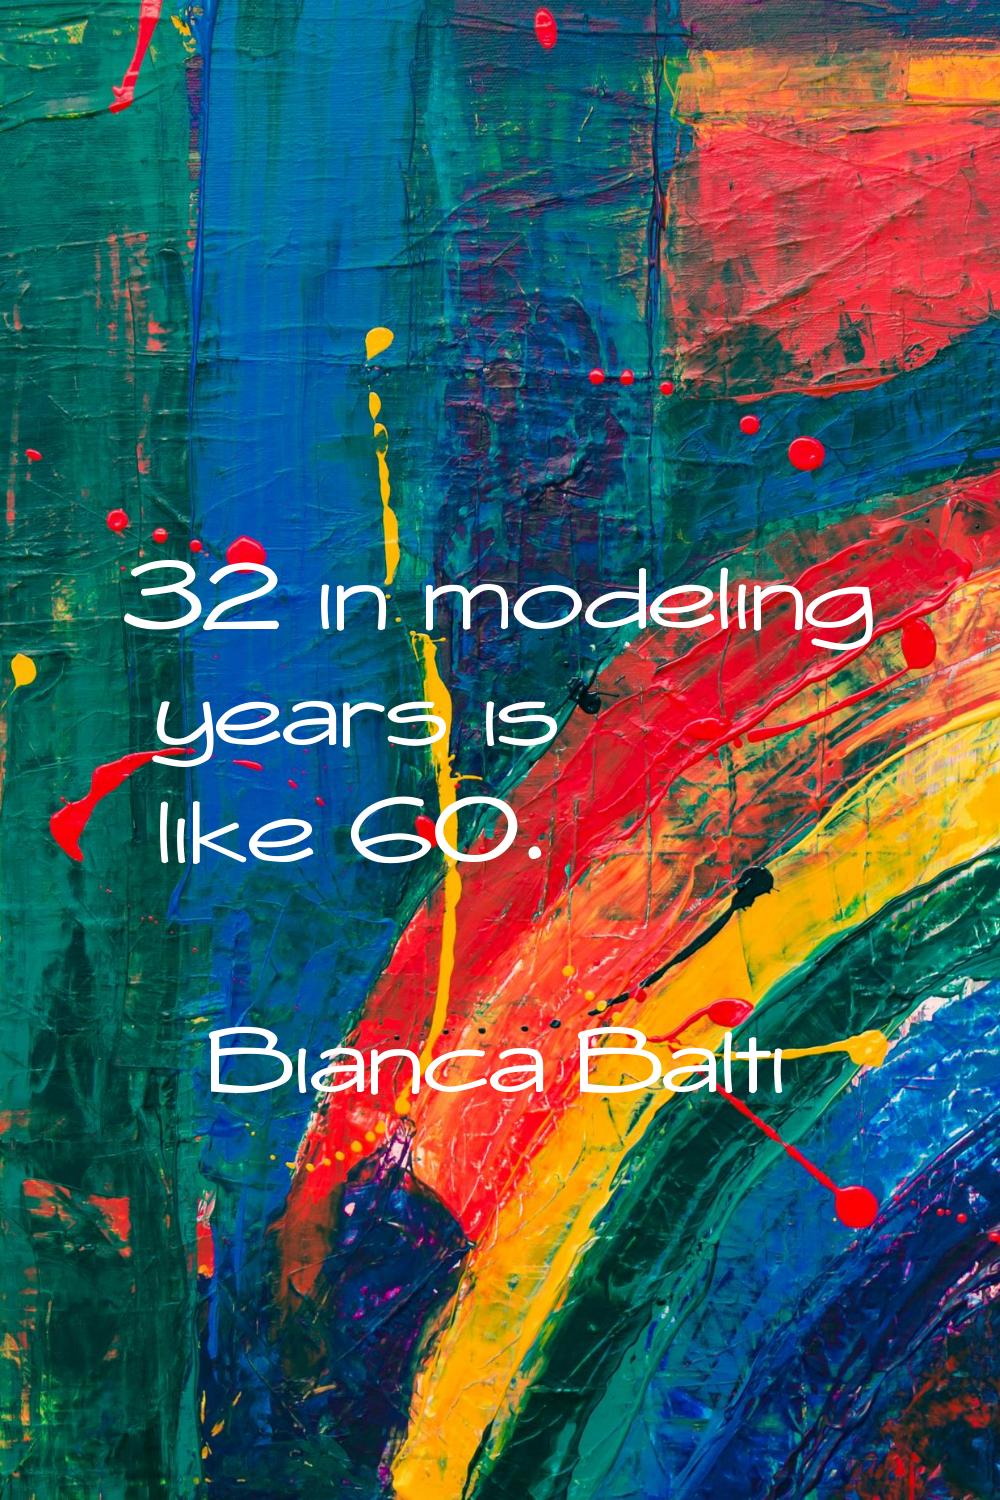 32 in modeling years is like 60.